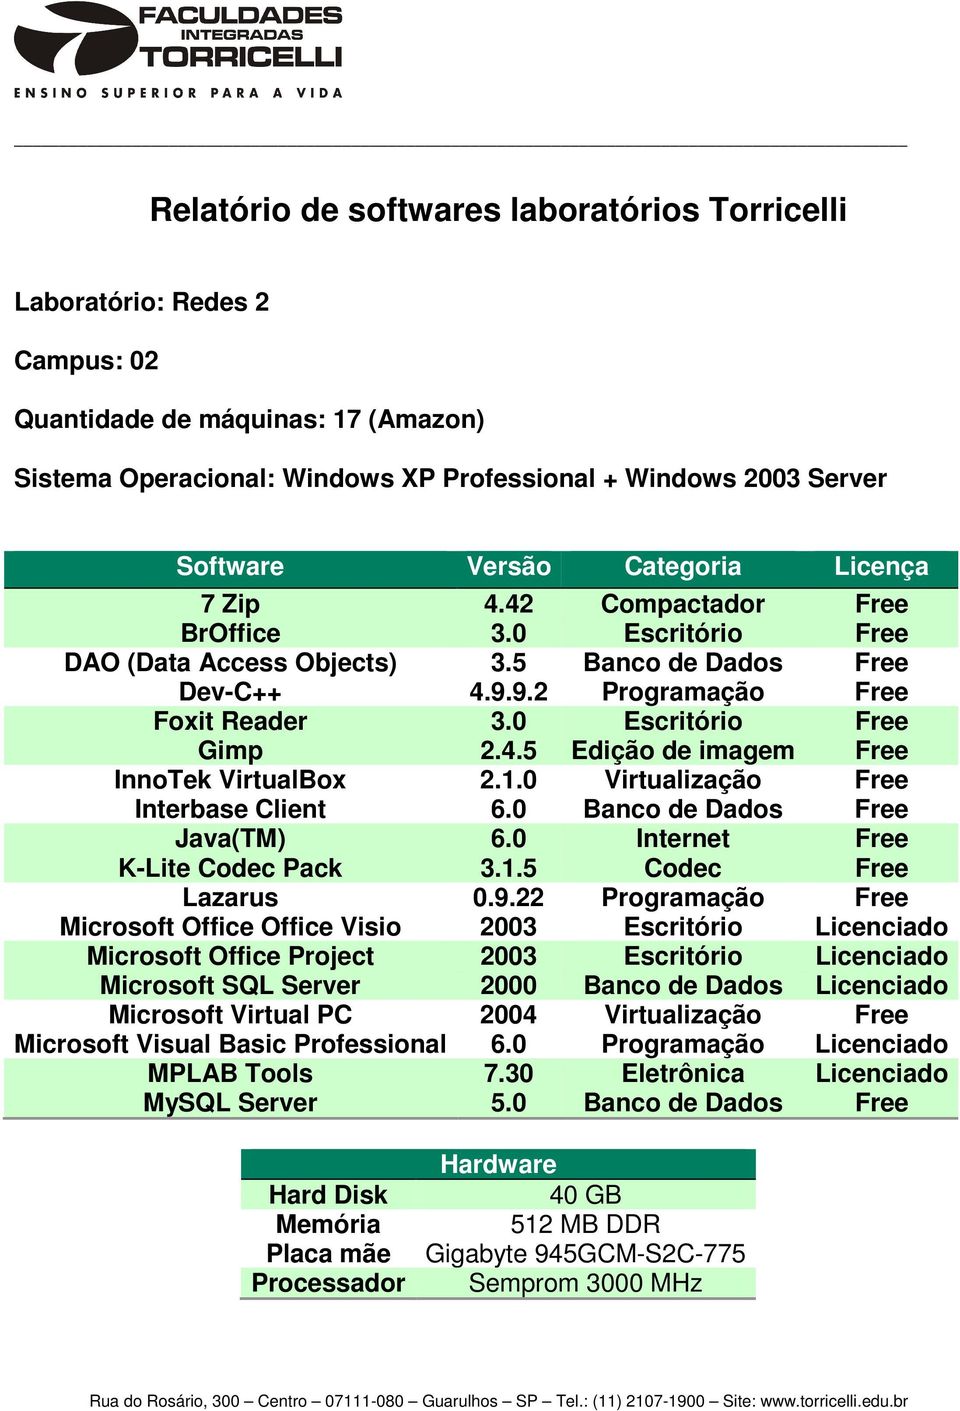 0 Virtualização Free Interbase Client 6.0 Banco de Dados Free K-Lite Codec Pack 3.1.5 Codec Free Lazarus 0.9.